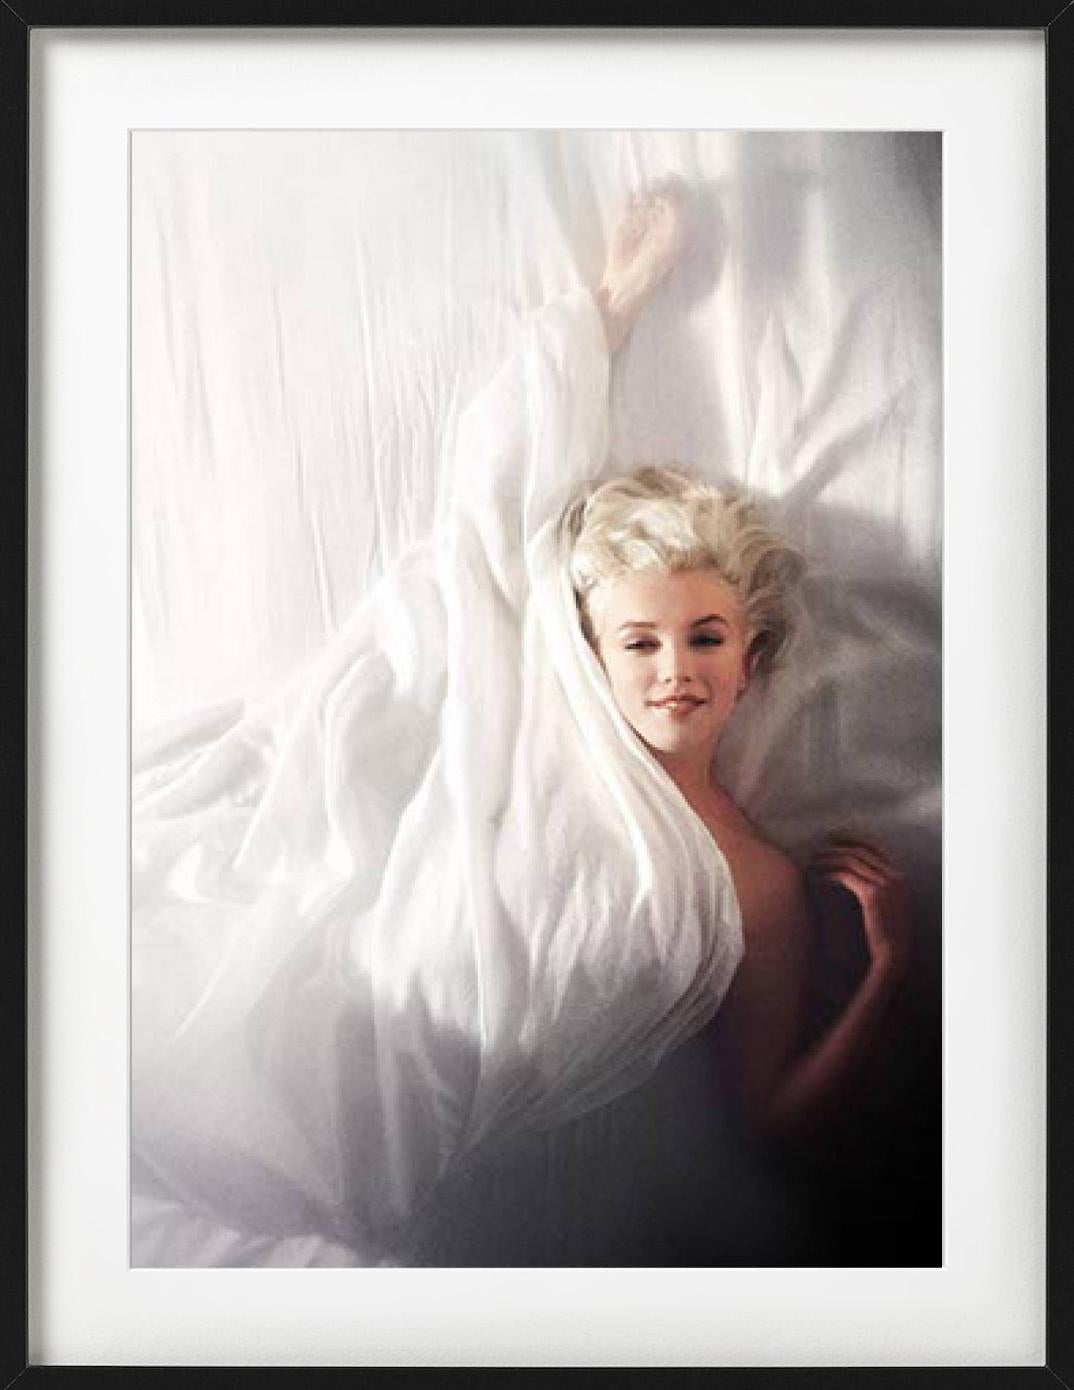 Marilyn Monroe - nude between white sheets, vintage fine art photography, 1961 - Photograph by Douglas Kirkland